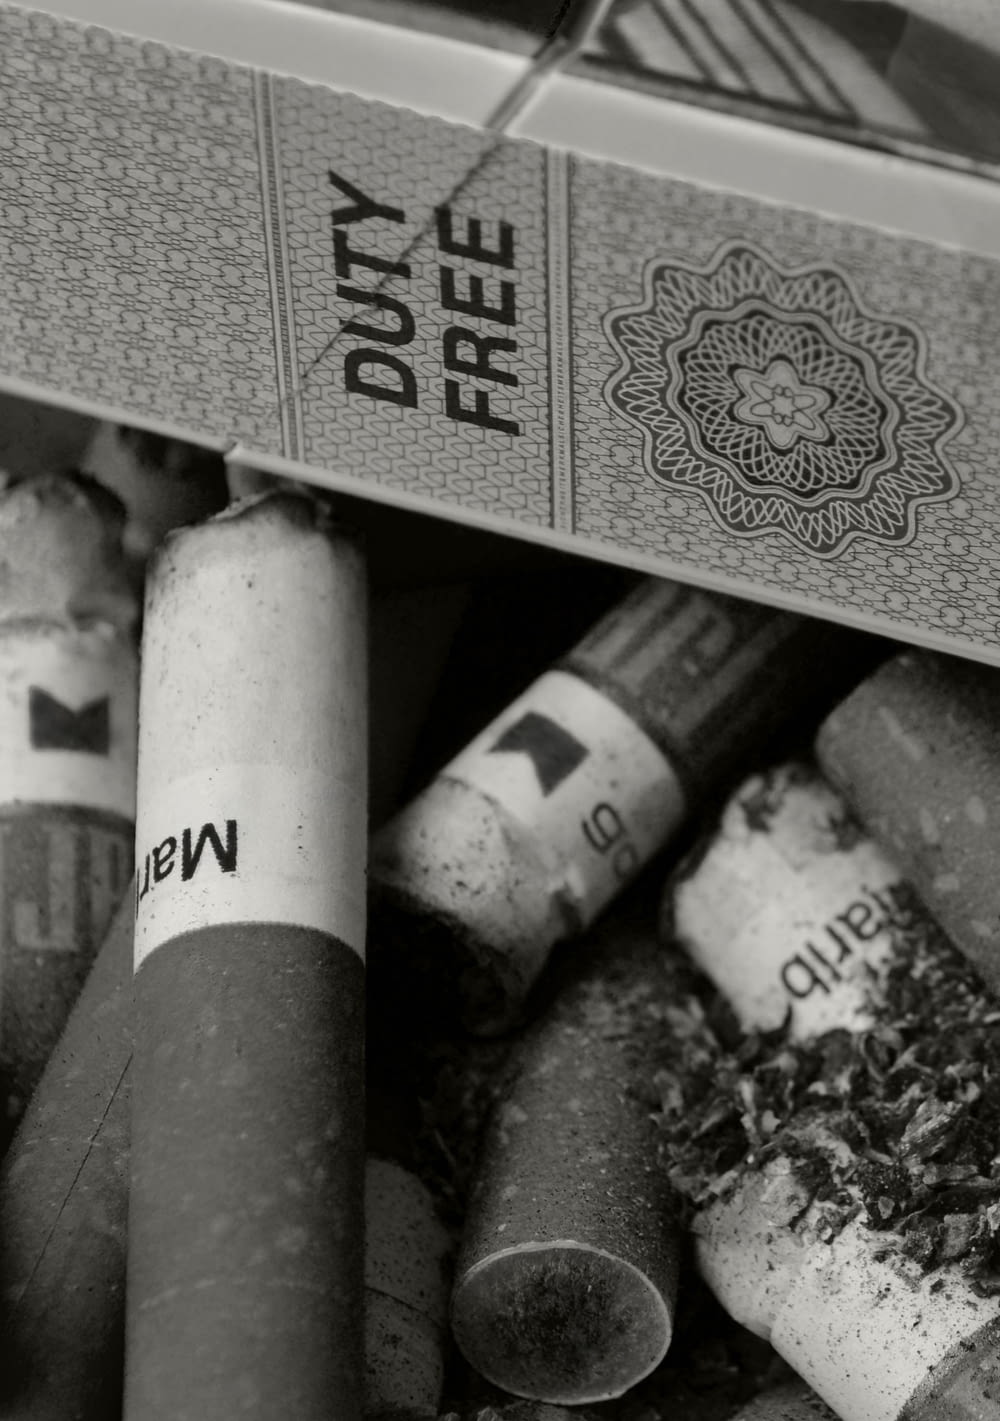 a close up of a box of cigarettes